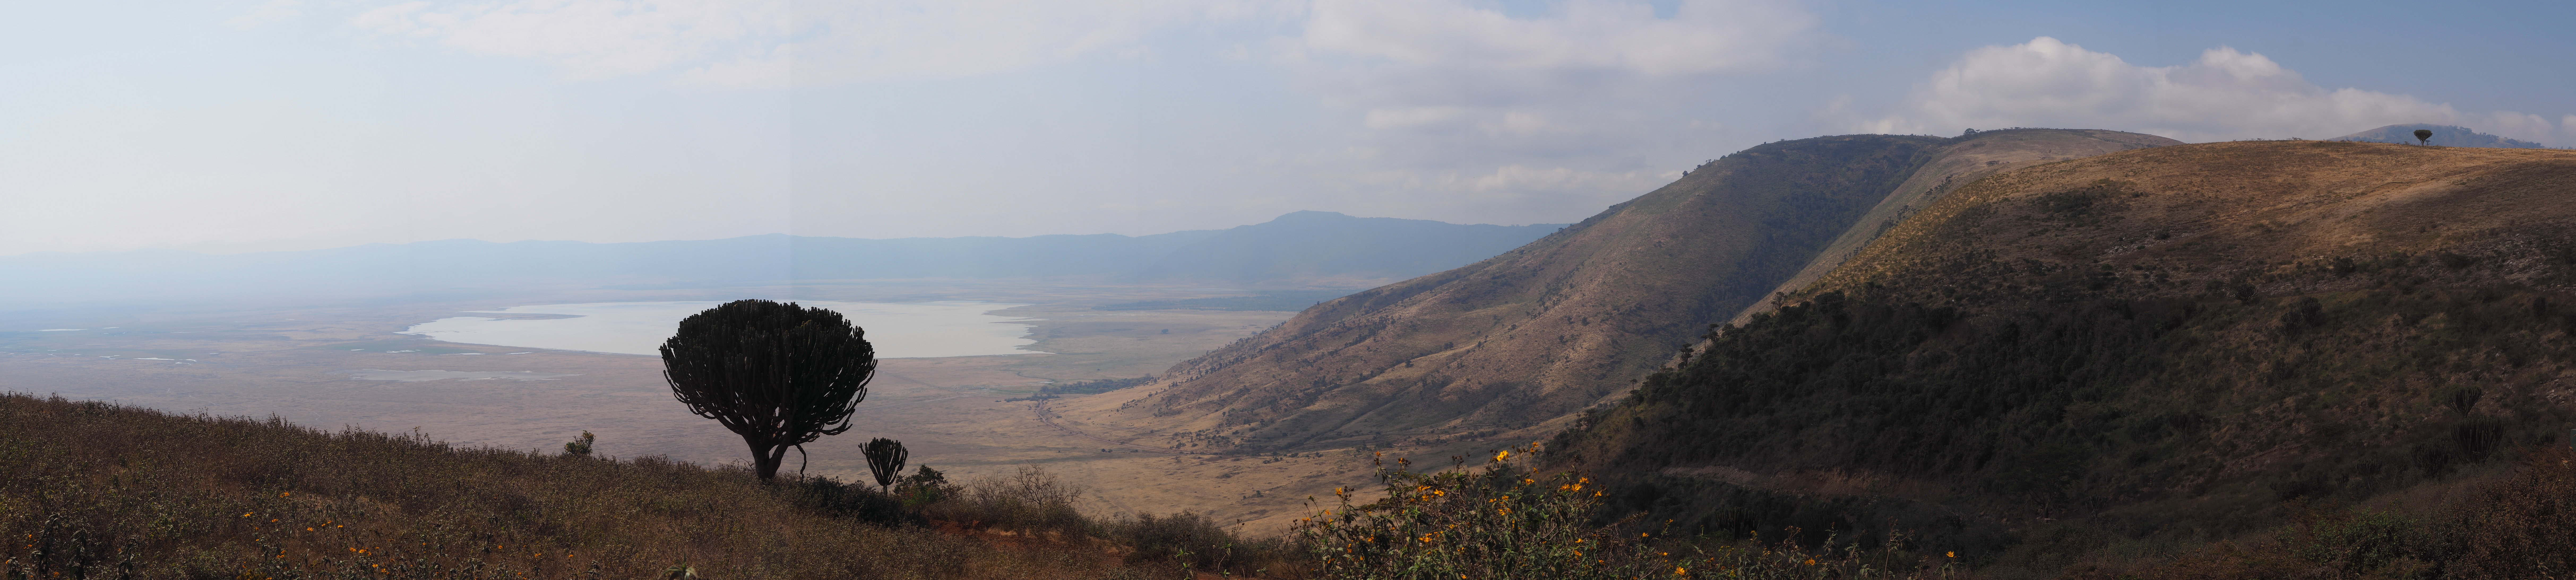 P8300286 #SafariVagamundos Tanzania Pano Ngorongoro